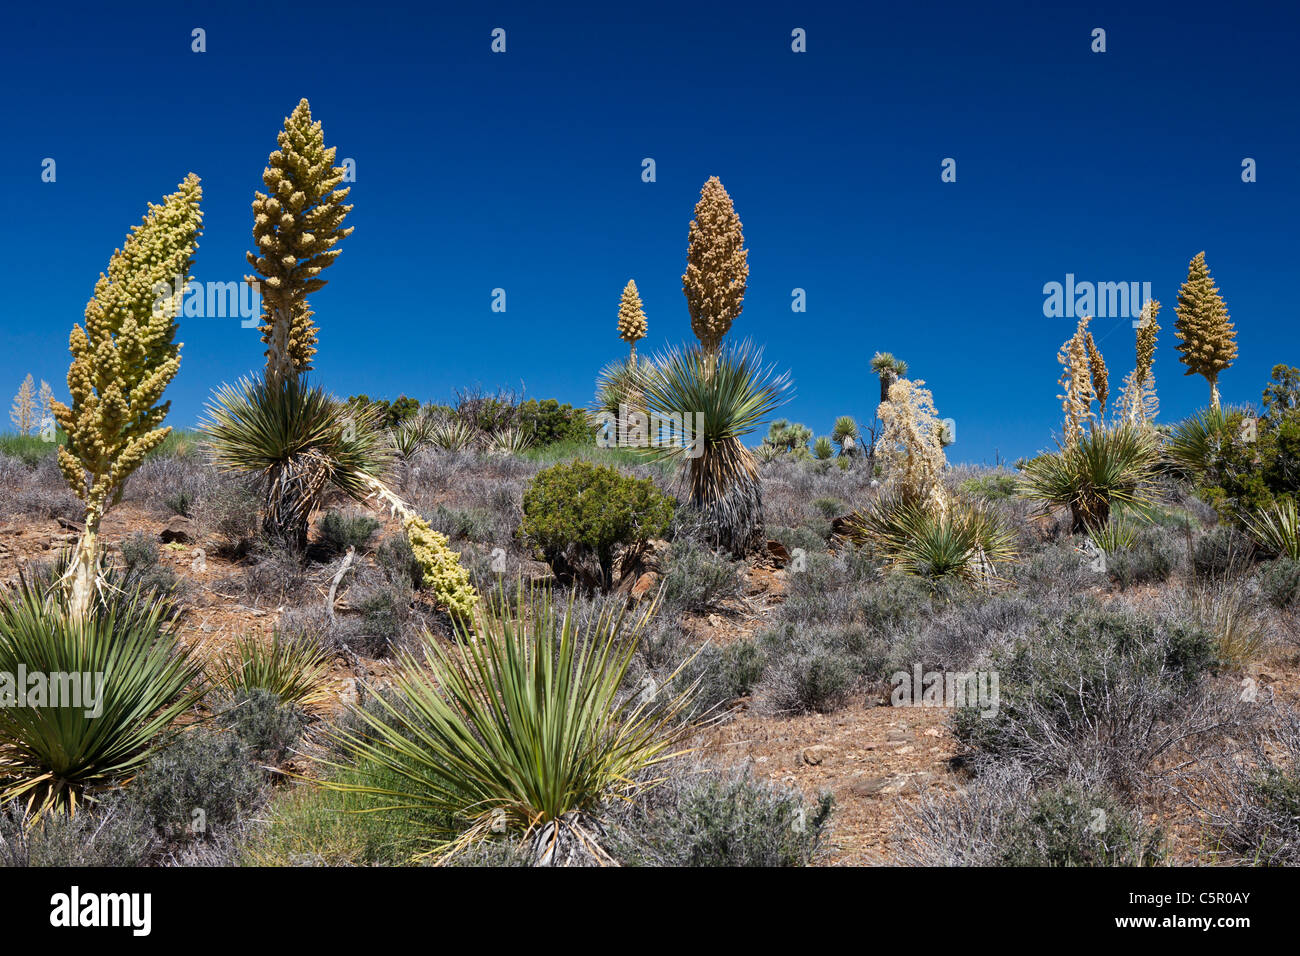 Blooming Mojave yucca plants (Yucca schidigera), Joshua Tree National Park, California, United States of America Stock Photo